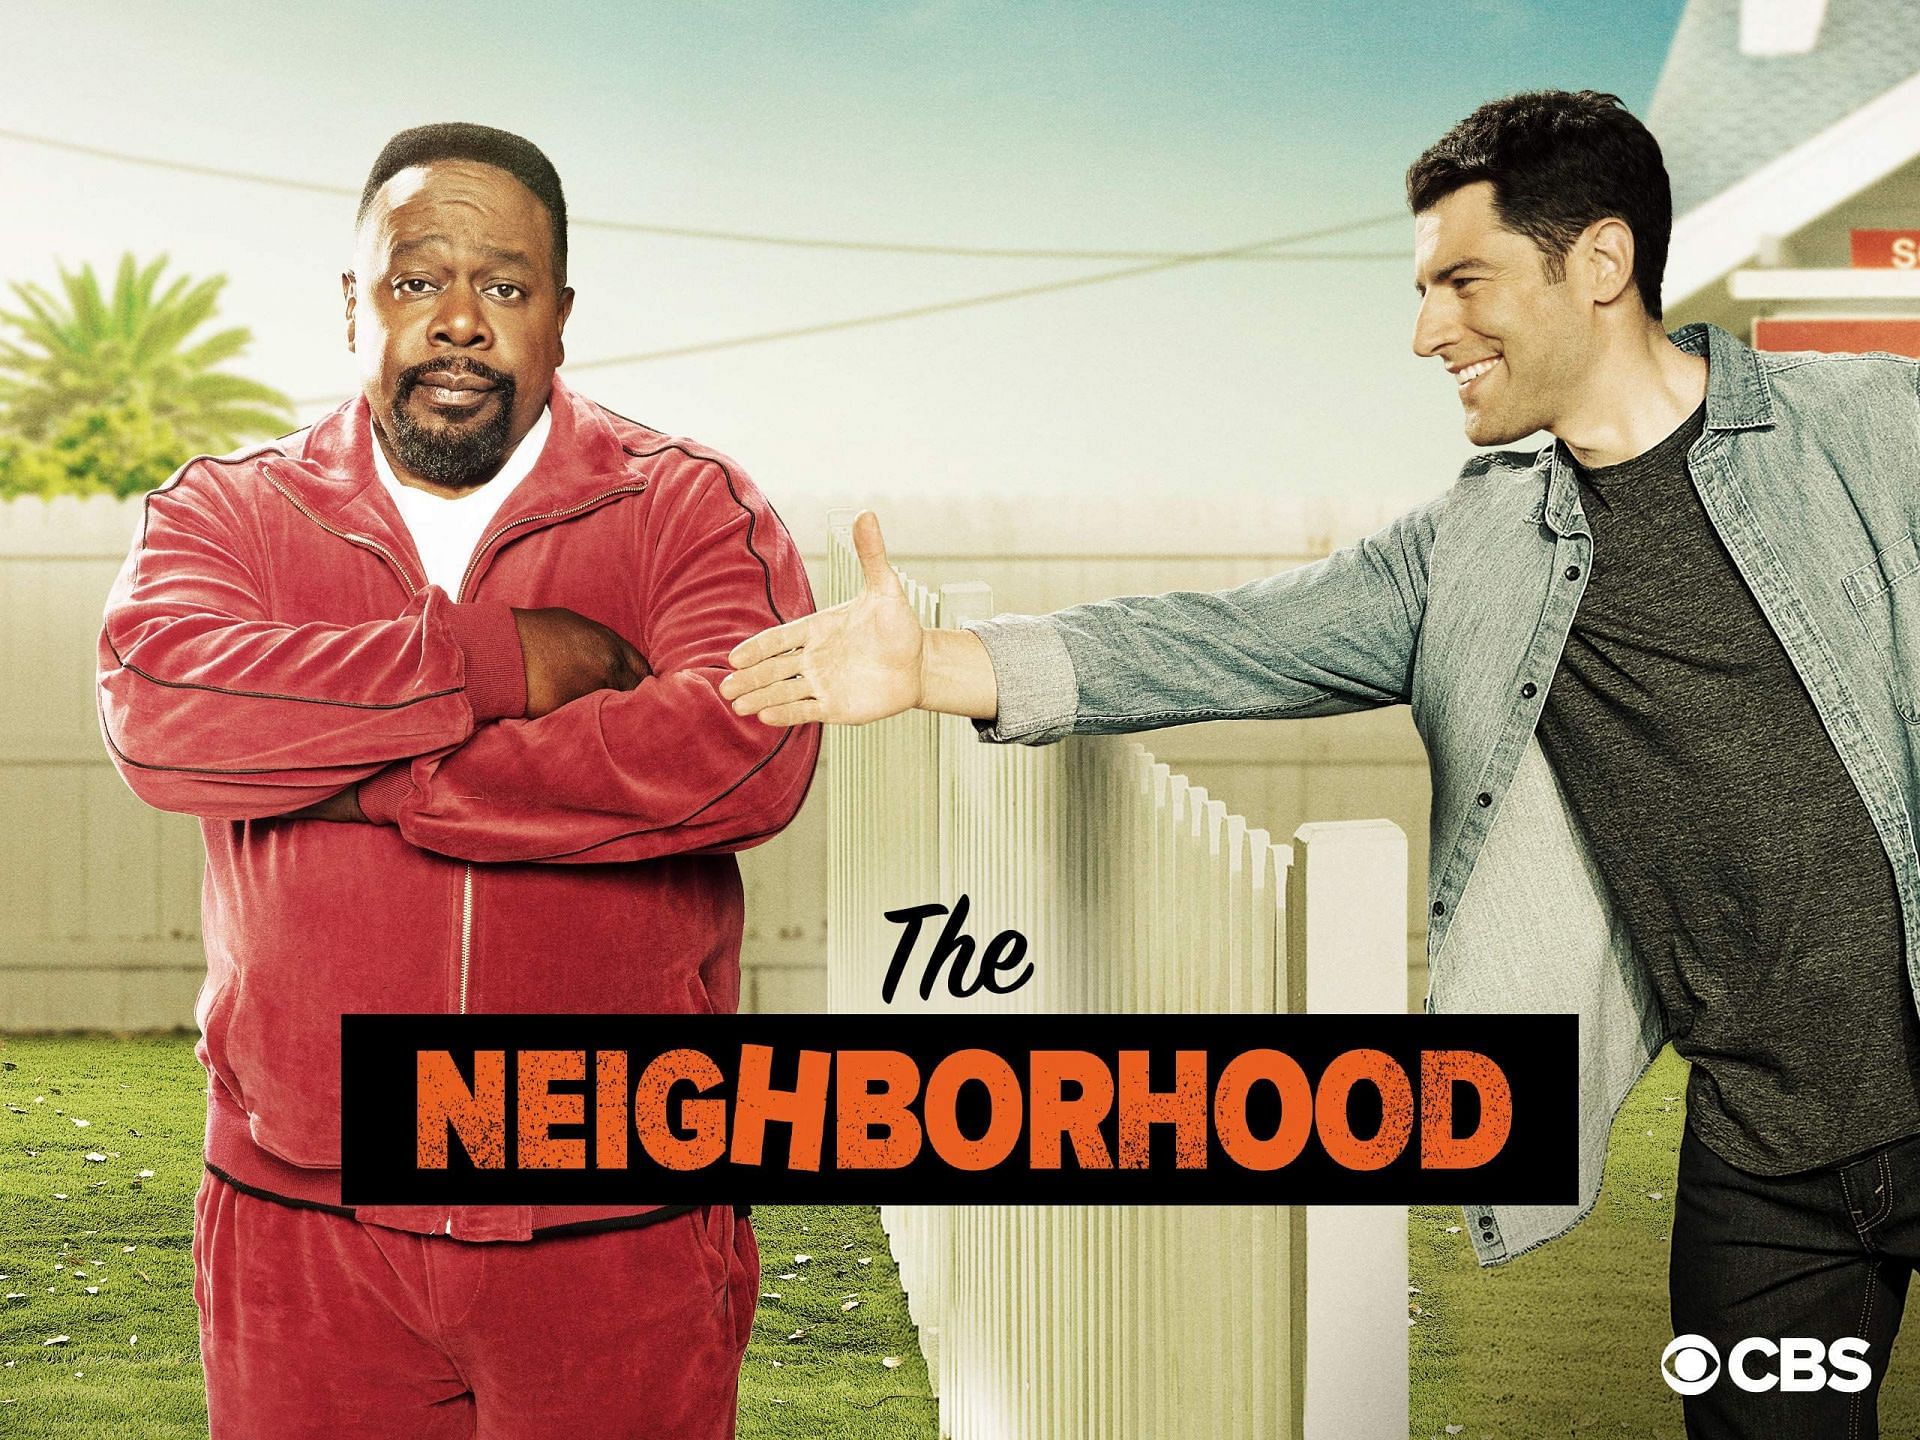 The Neighborhood (Image via CBS)